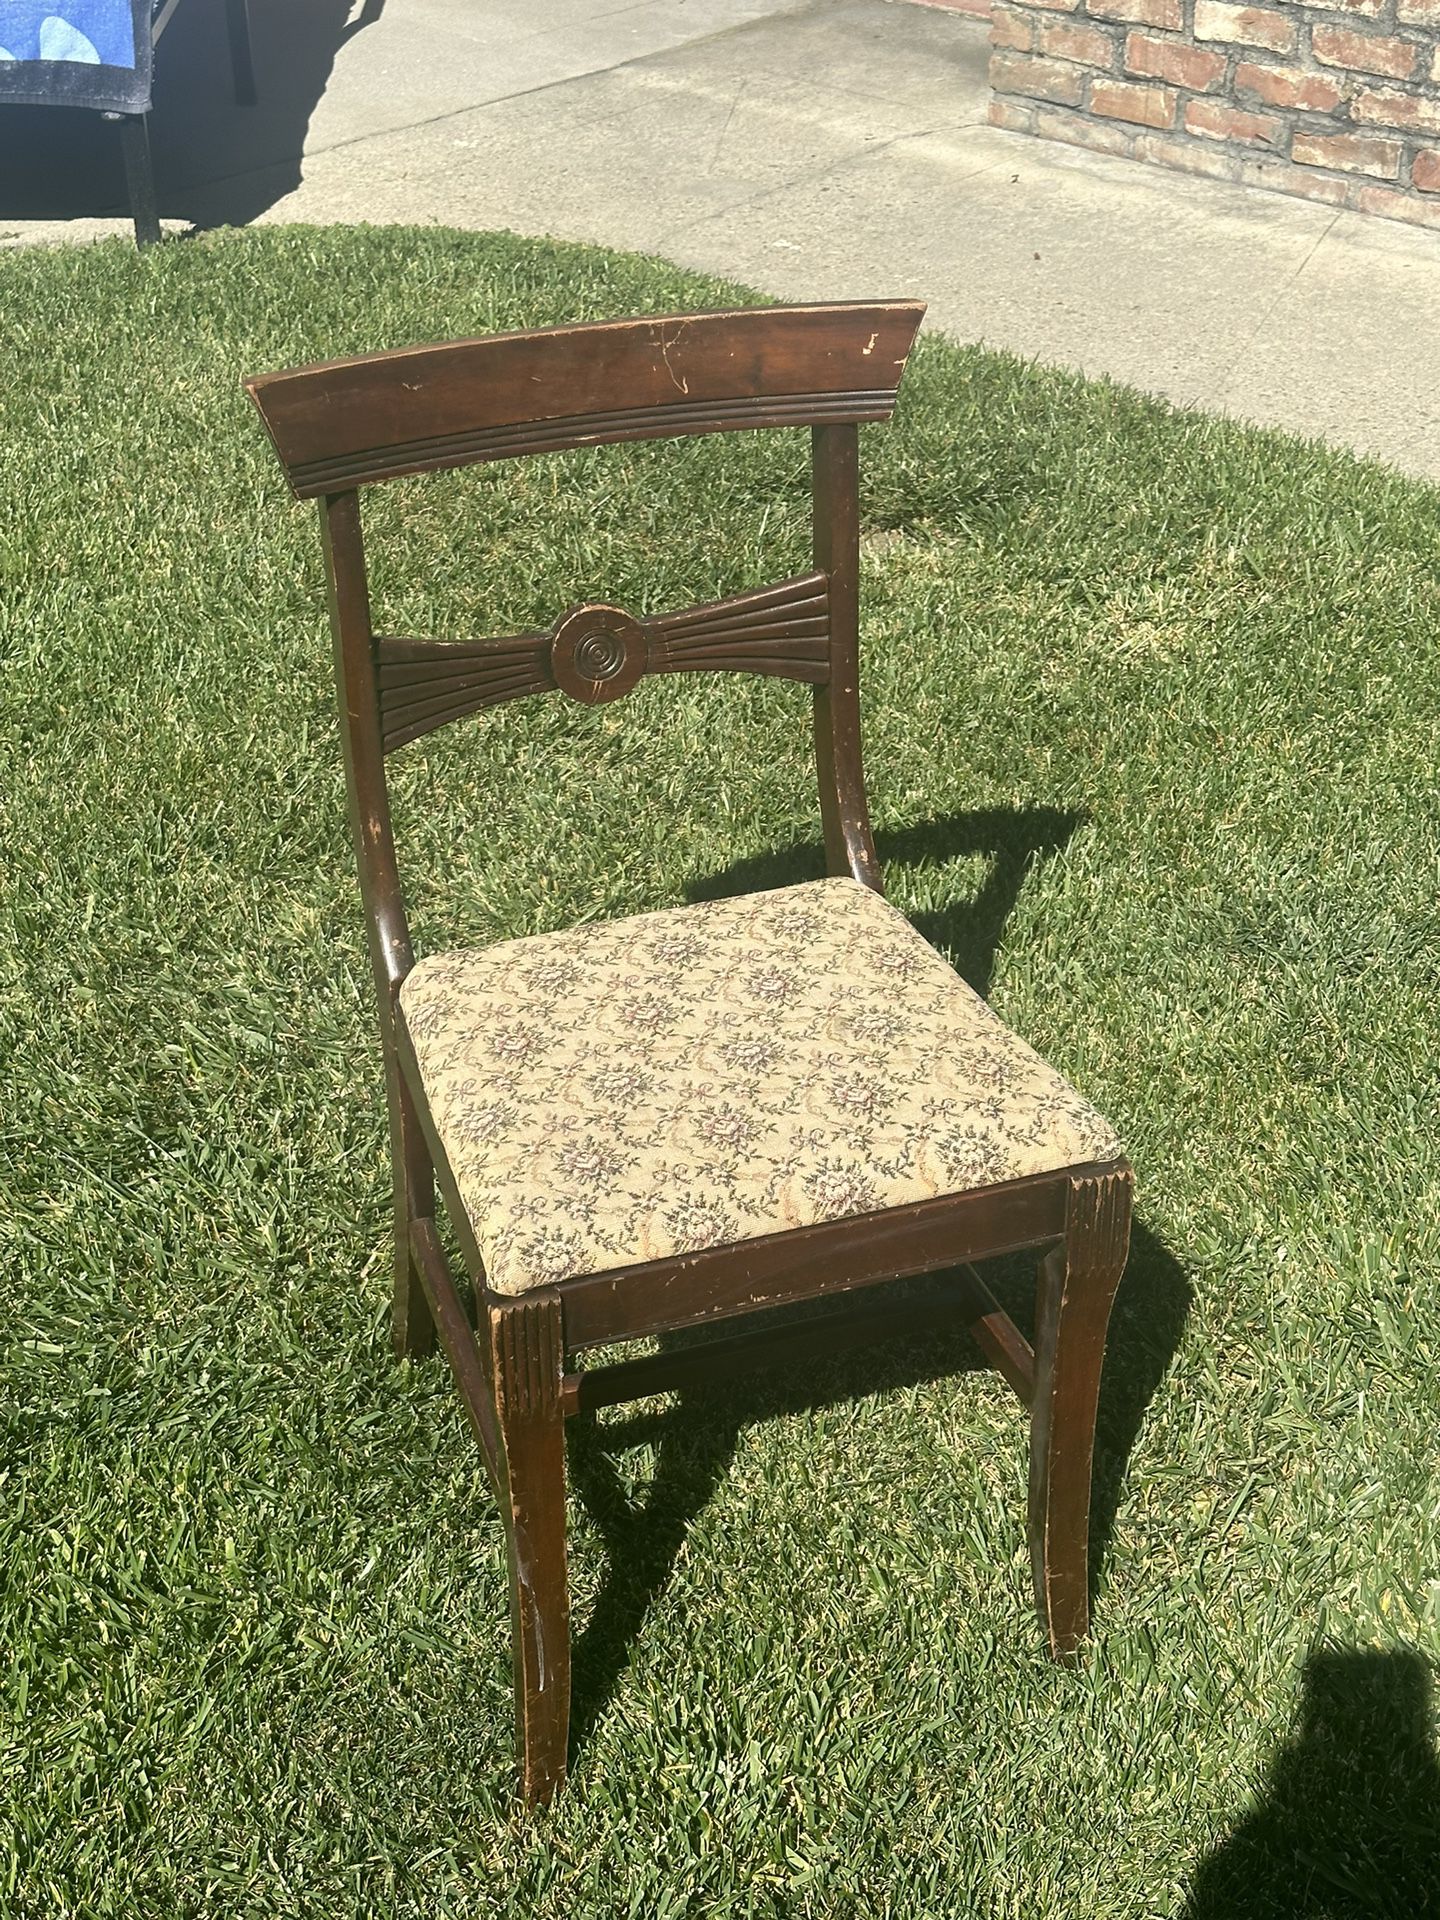 Antique Mahogany Chair